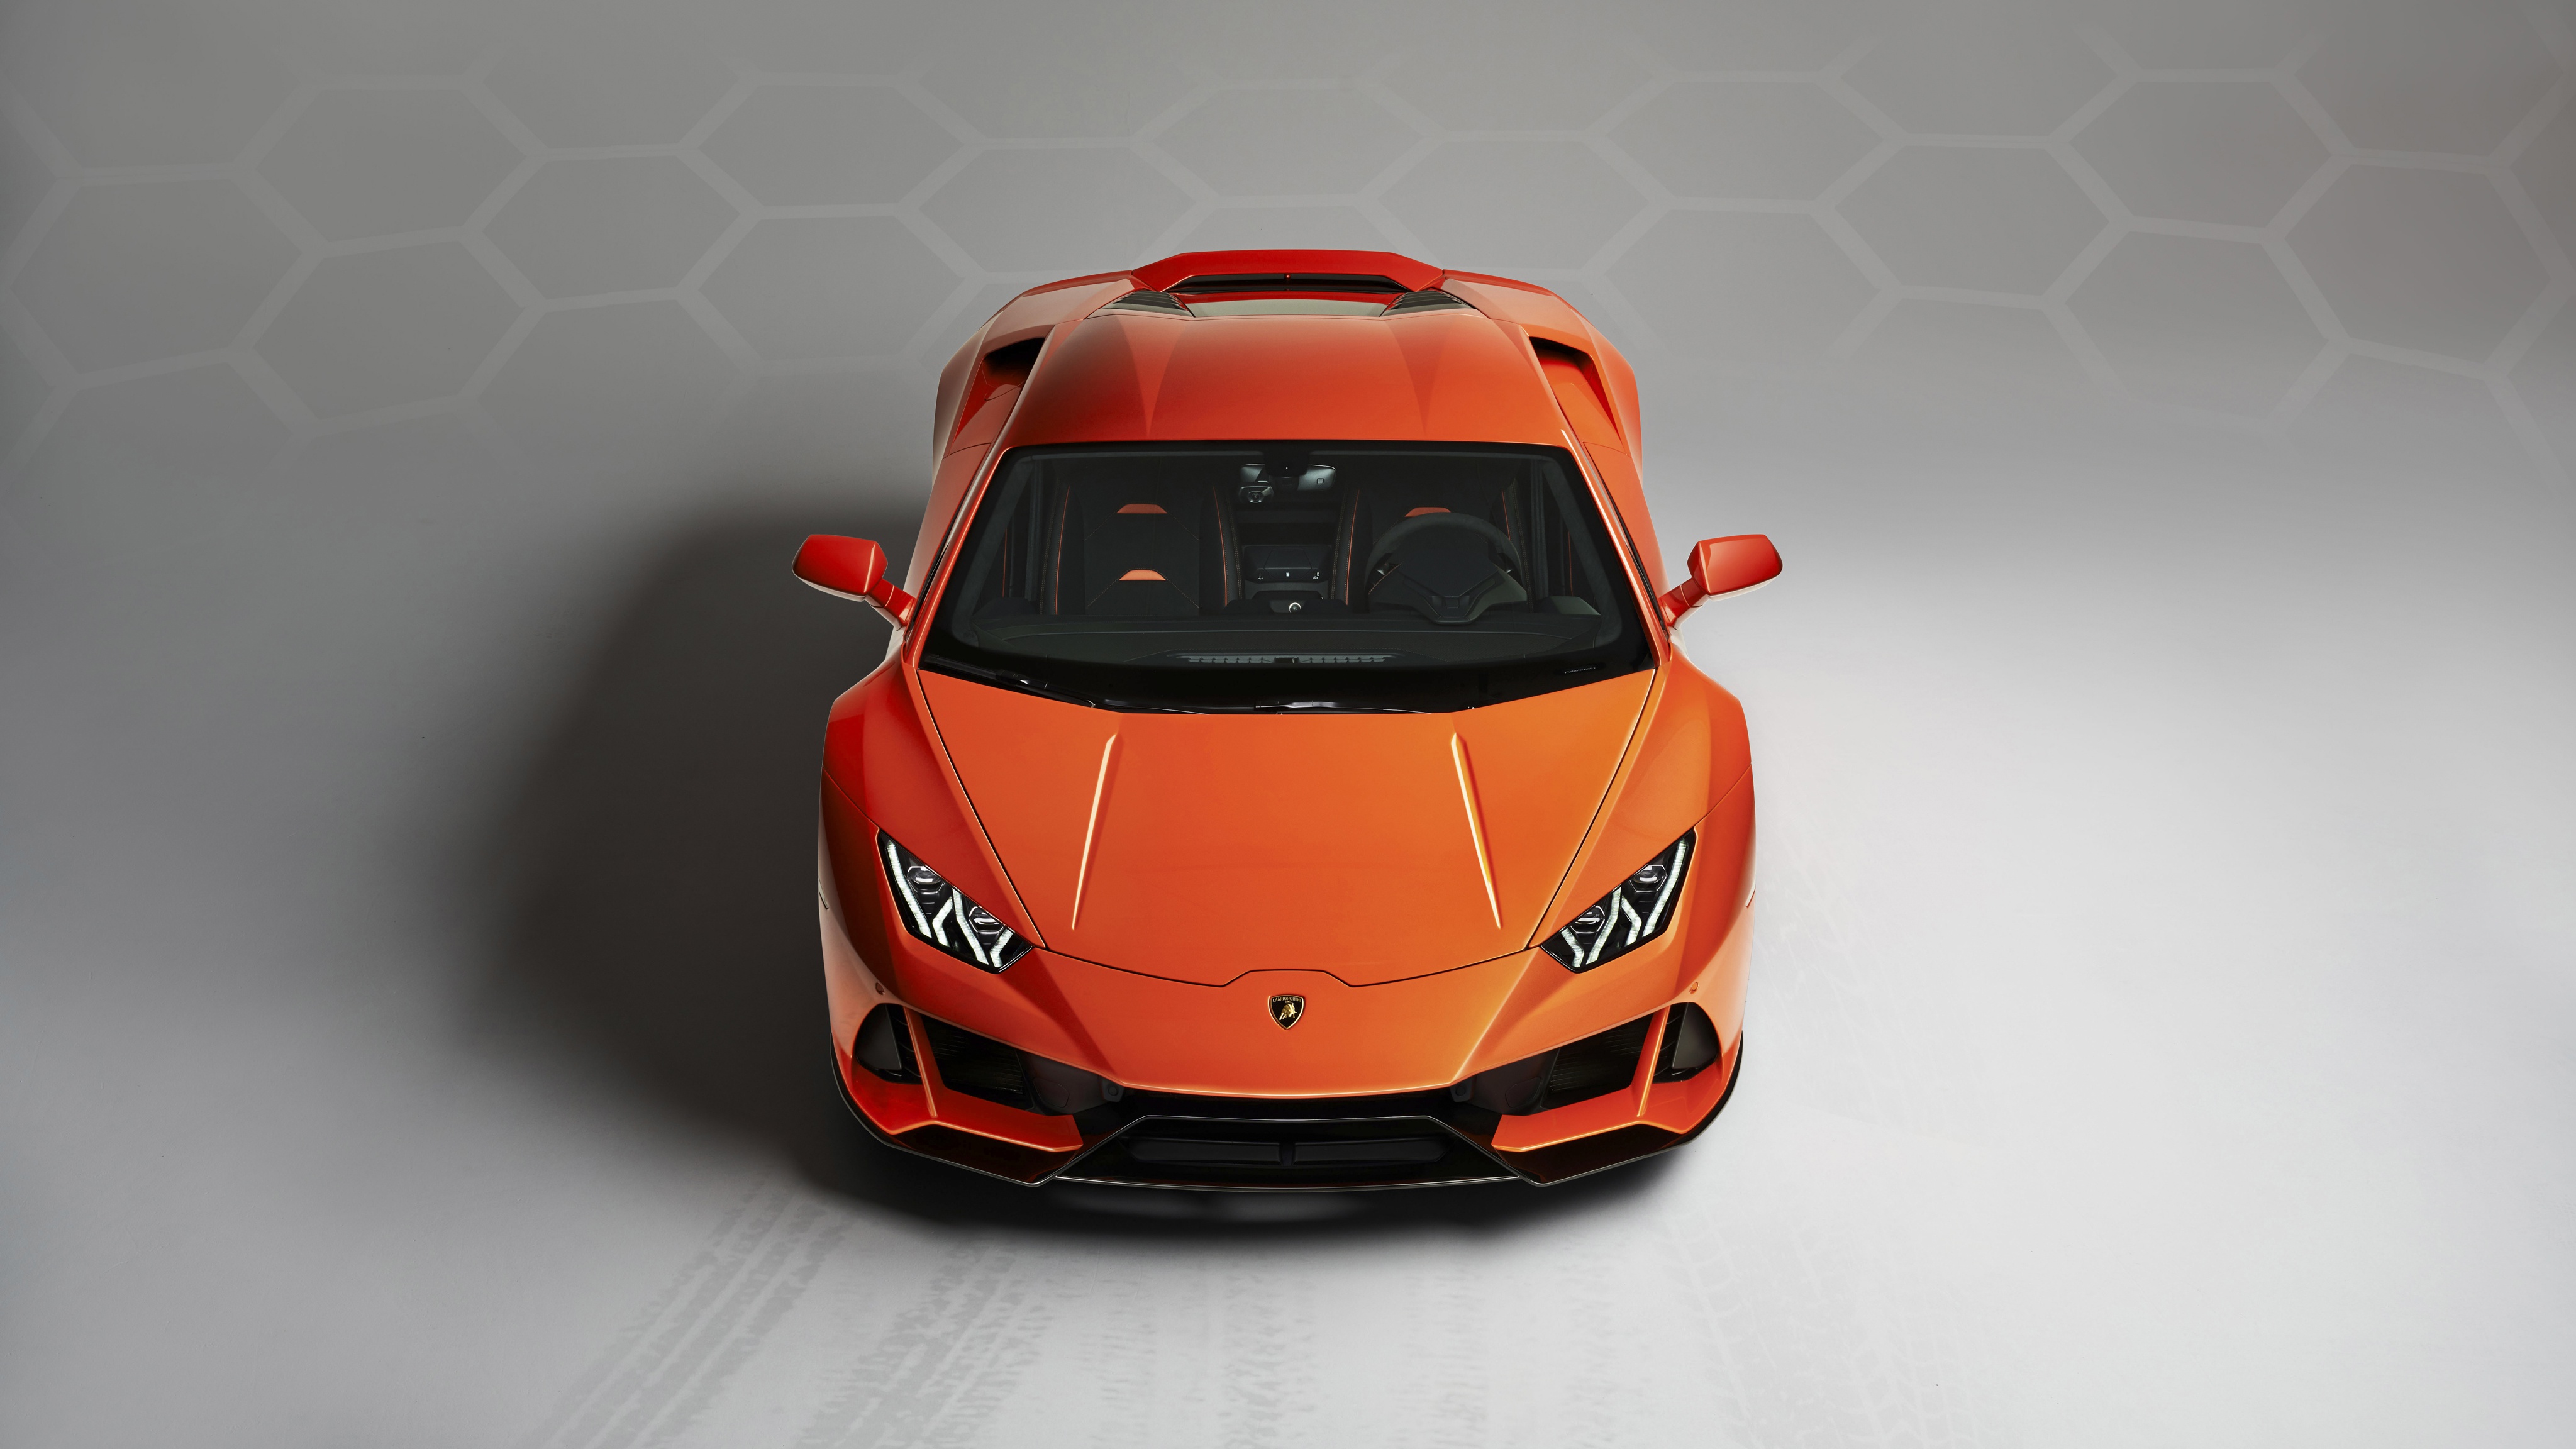 Baixe gratuitamente a imagem Lamborghini, Carro, Super Carro, Veículos, Carro Laranja, Lamborghini Huracán Evo na área de trabalho do seu PC